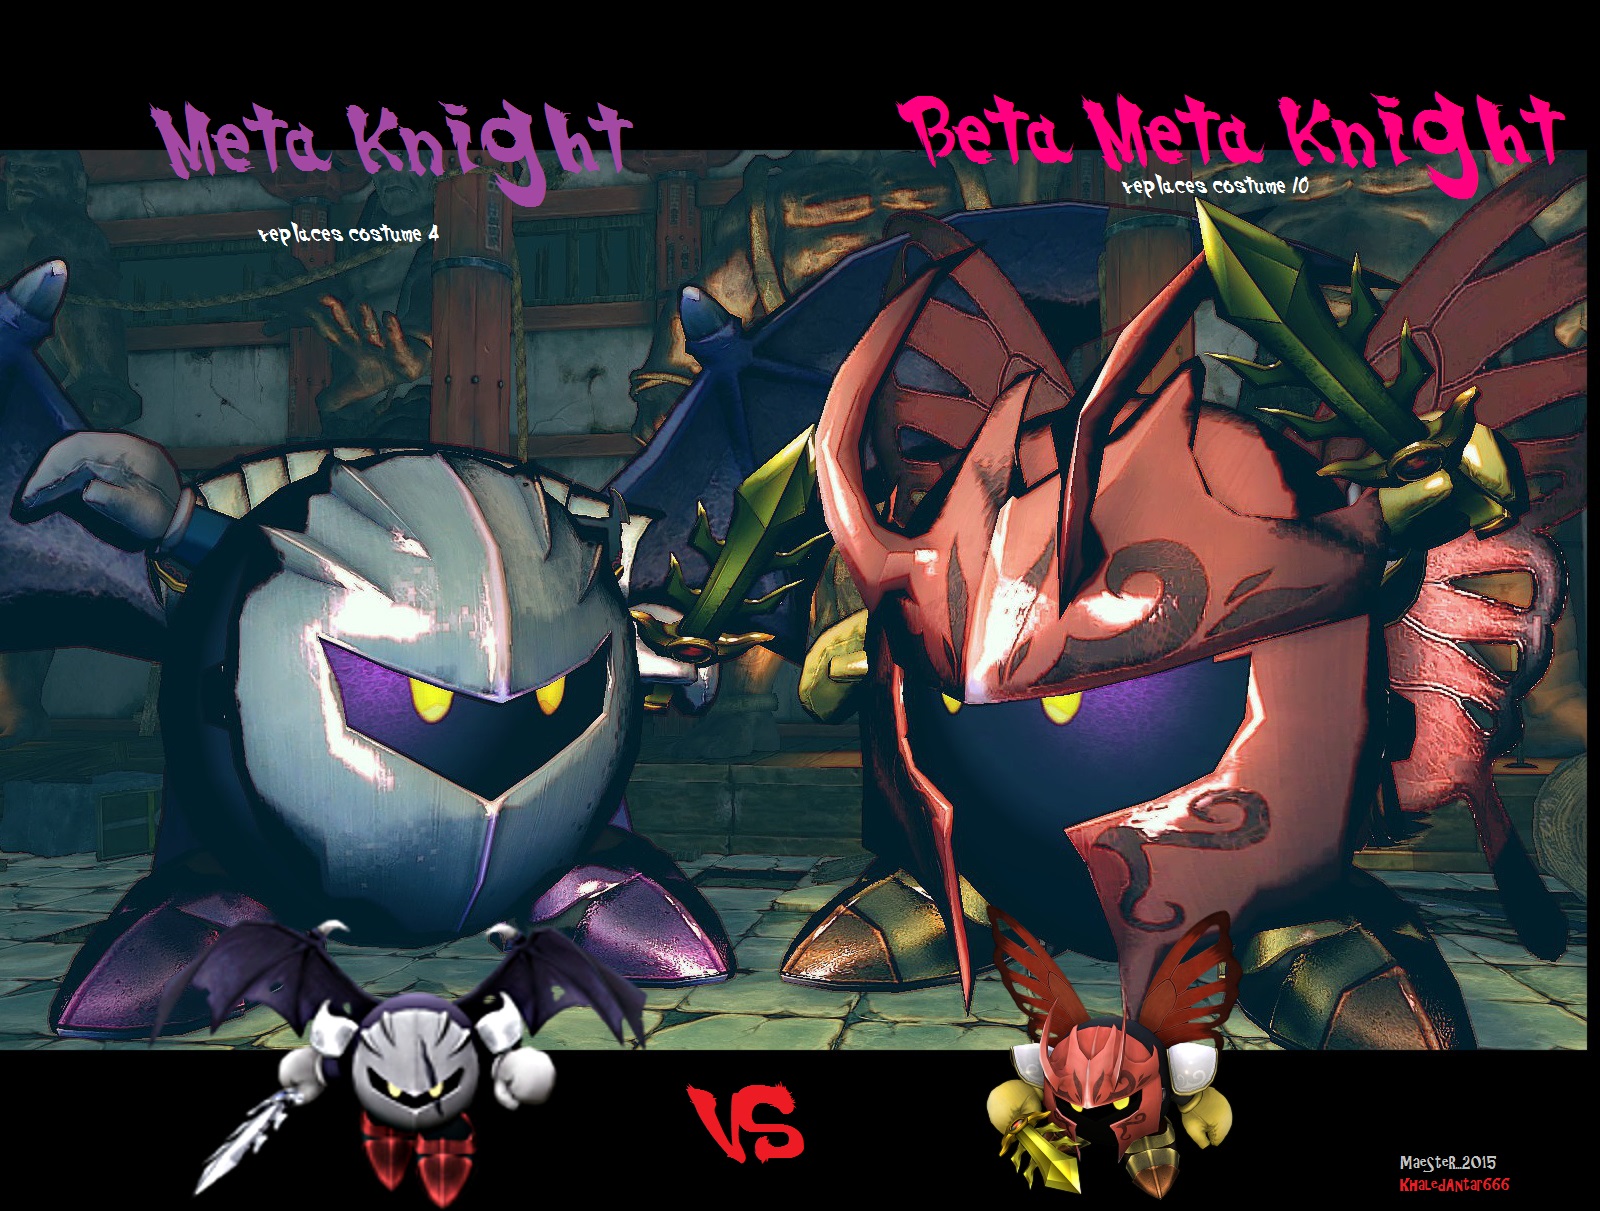 MetaKnight and Beta Meta Knight